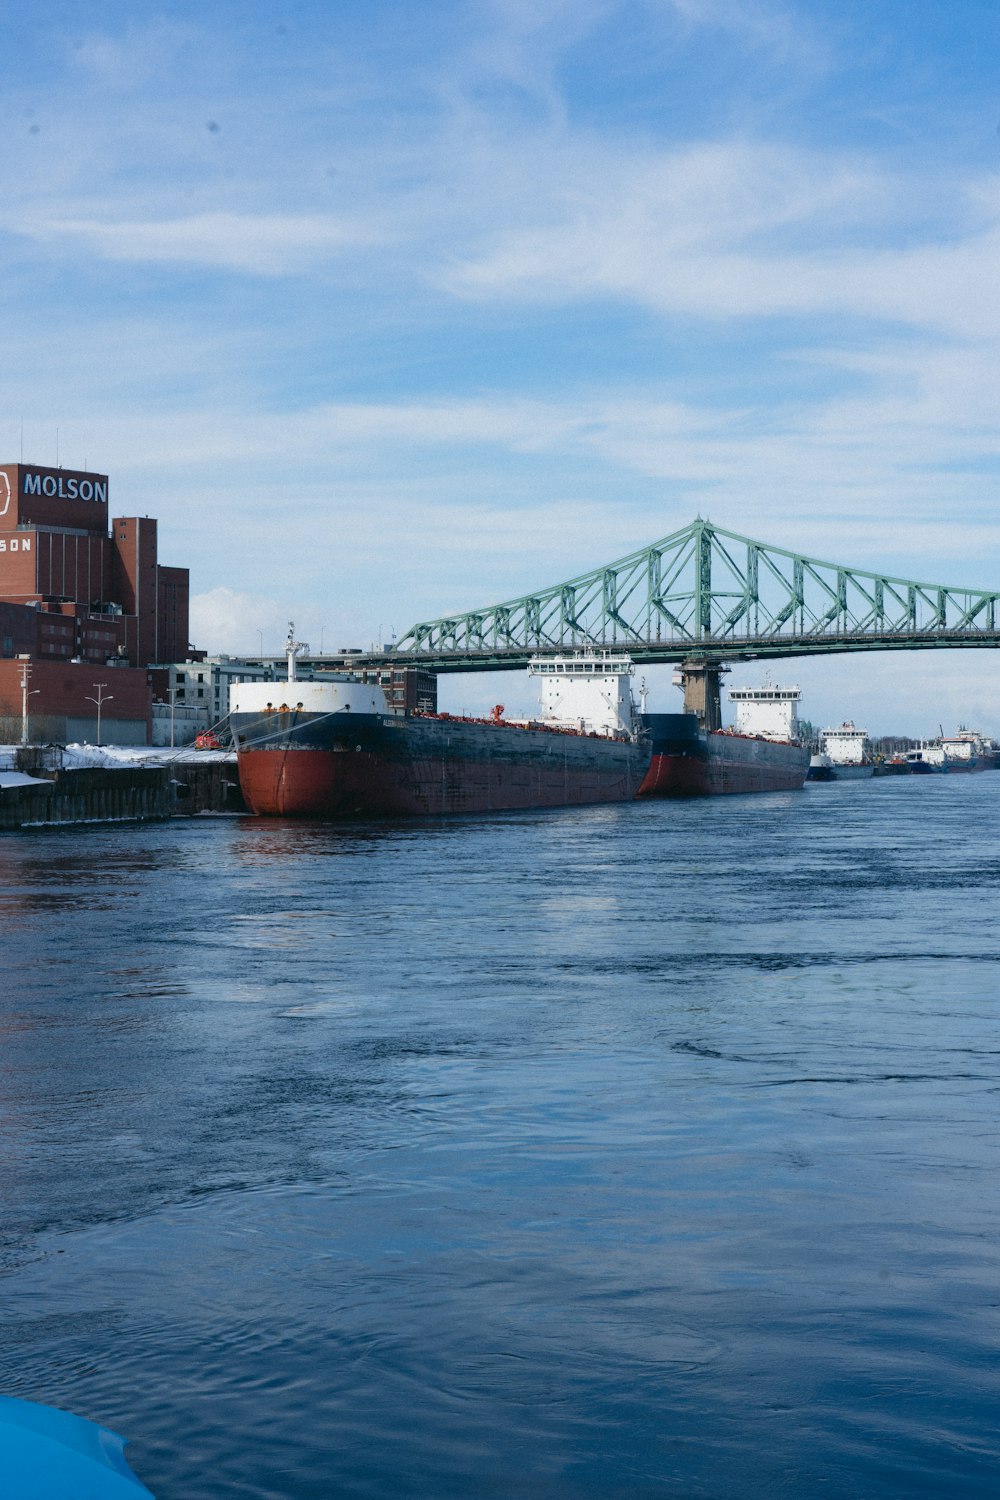 a large cargo ship in the water near a bridge